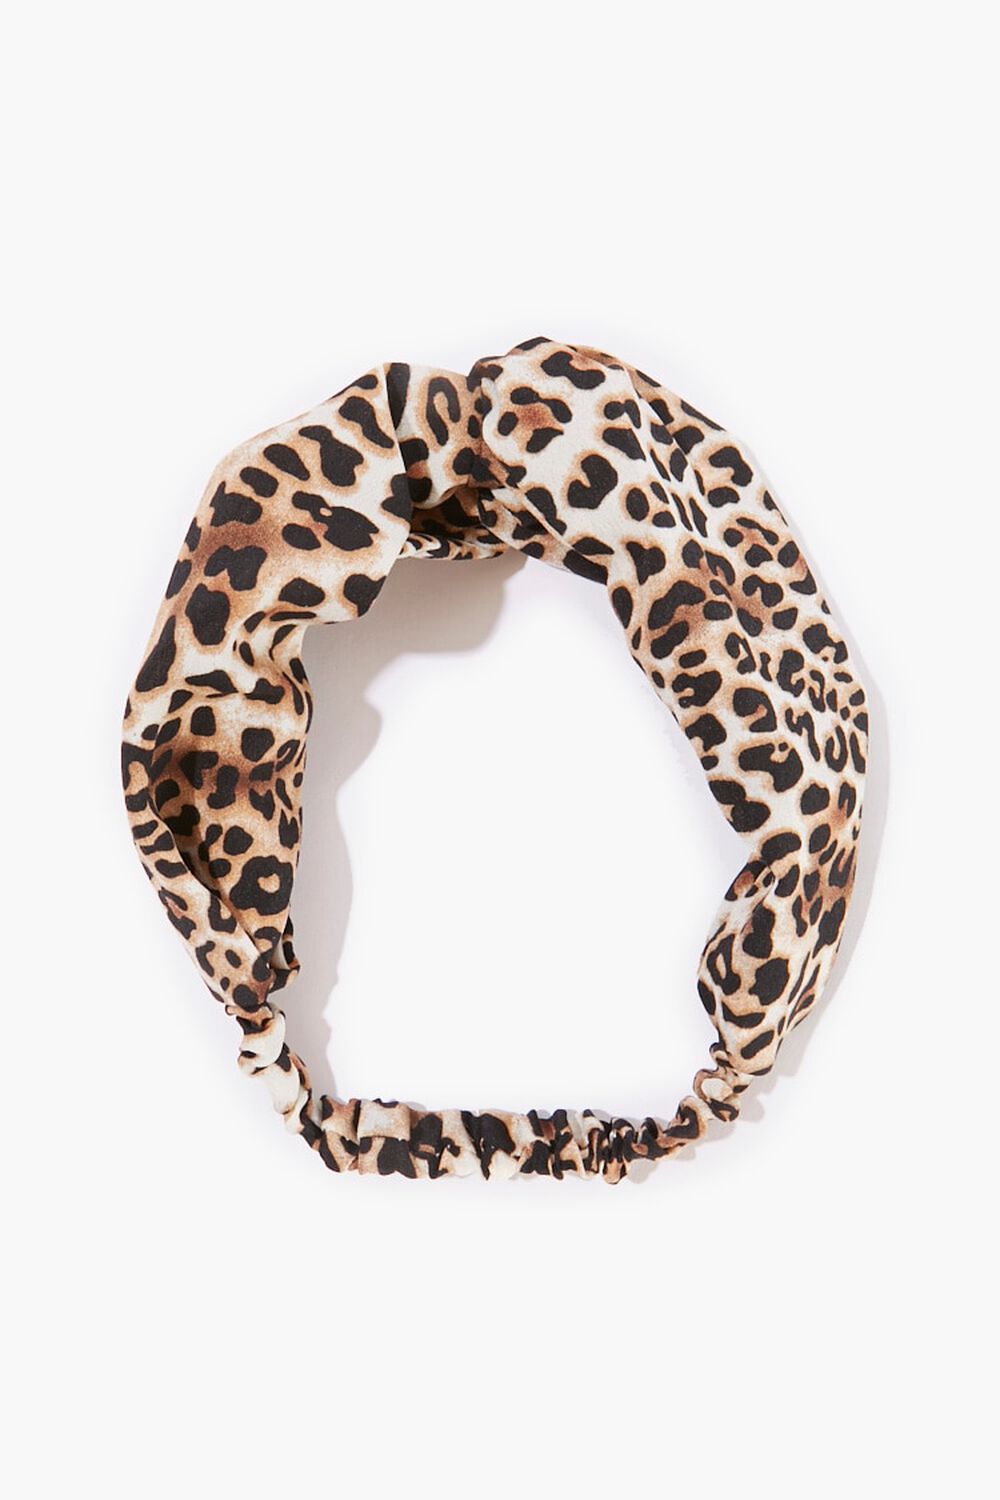 BROWN/MULTI Leopard Print Headwrap, image 2